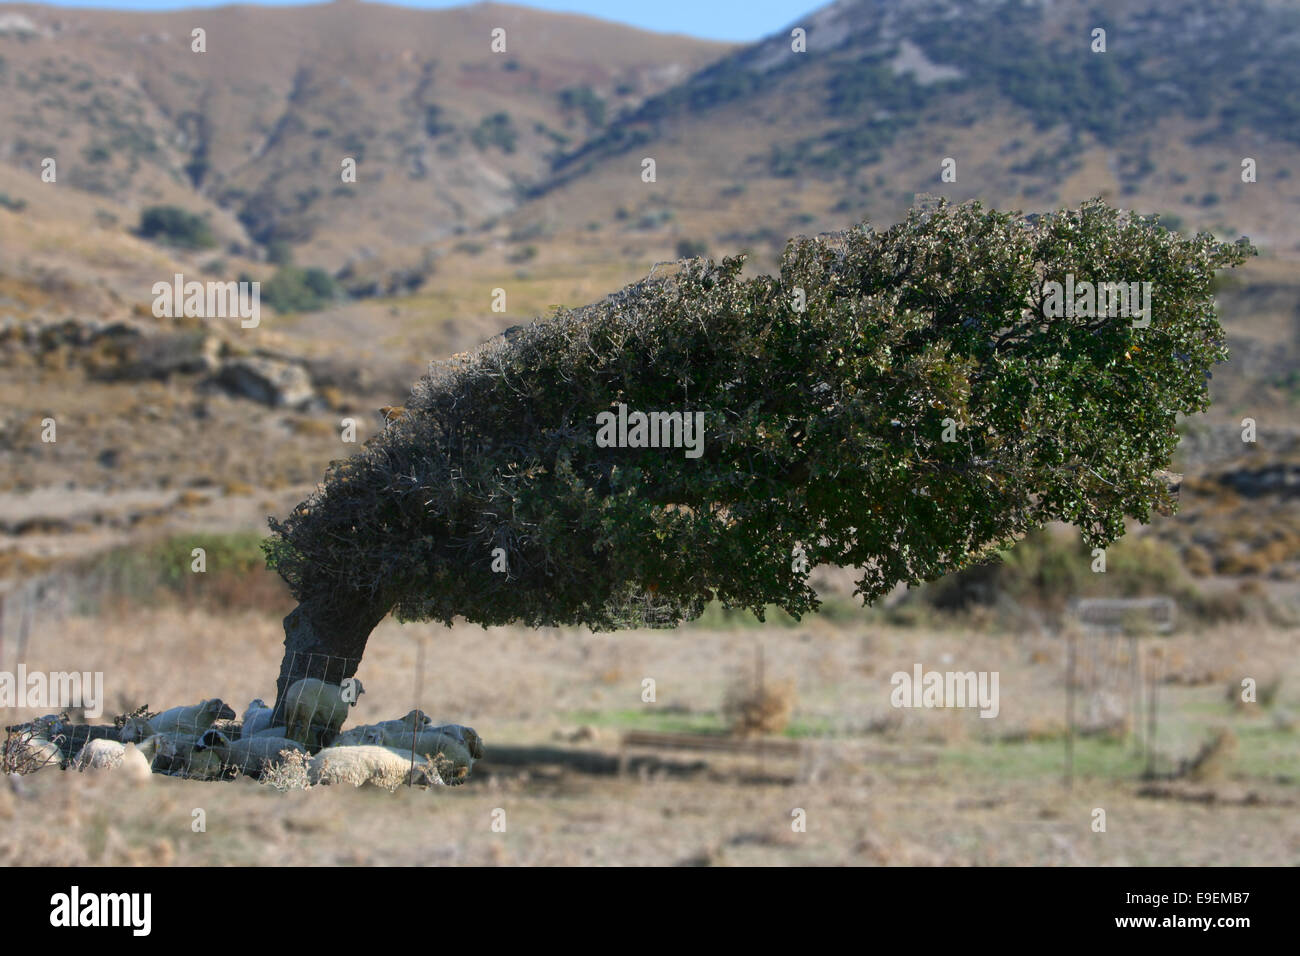 Sheeps under slanted tree, natural Stock Photo